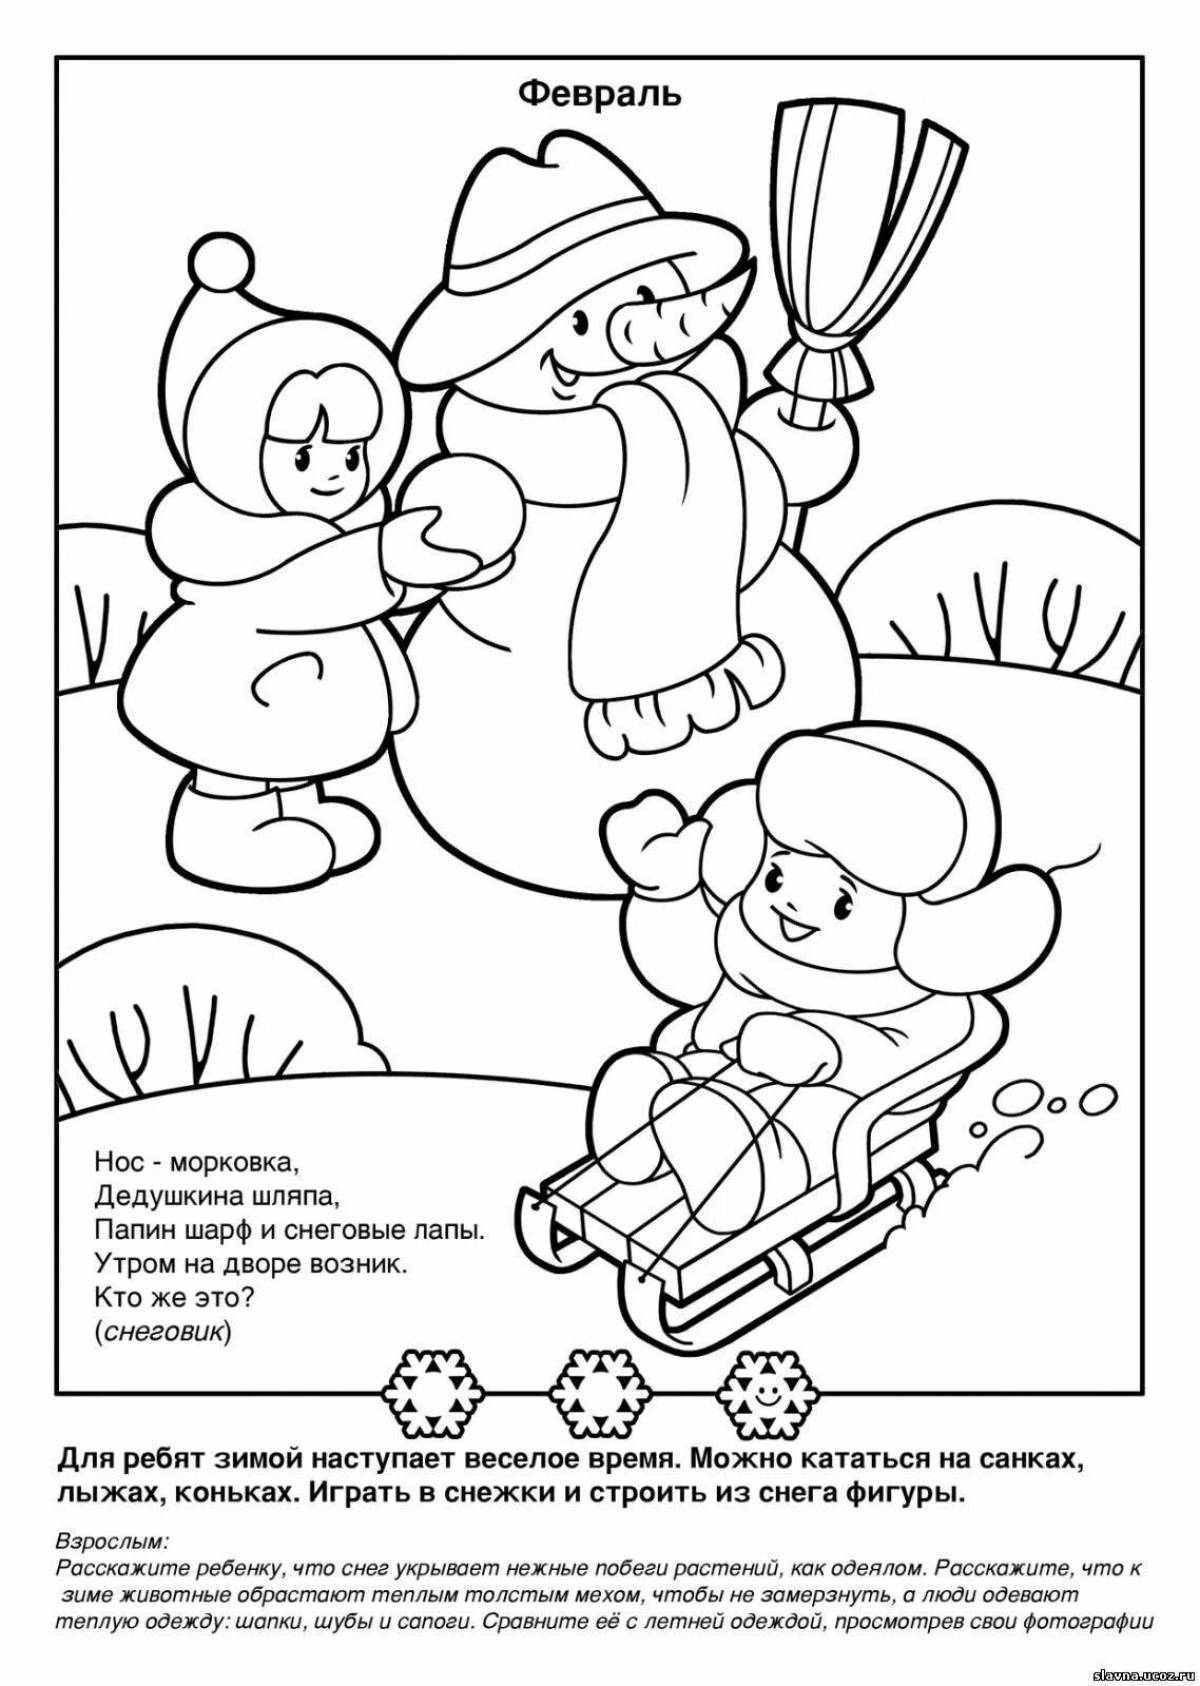 Fantastic January coloring book for kids